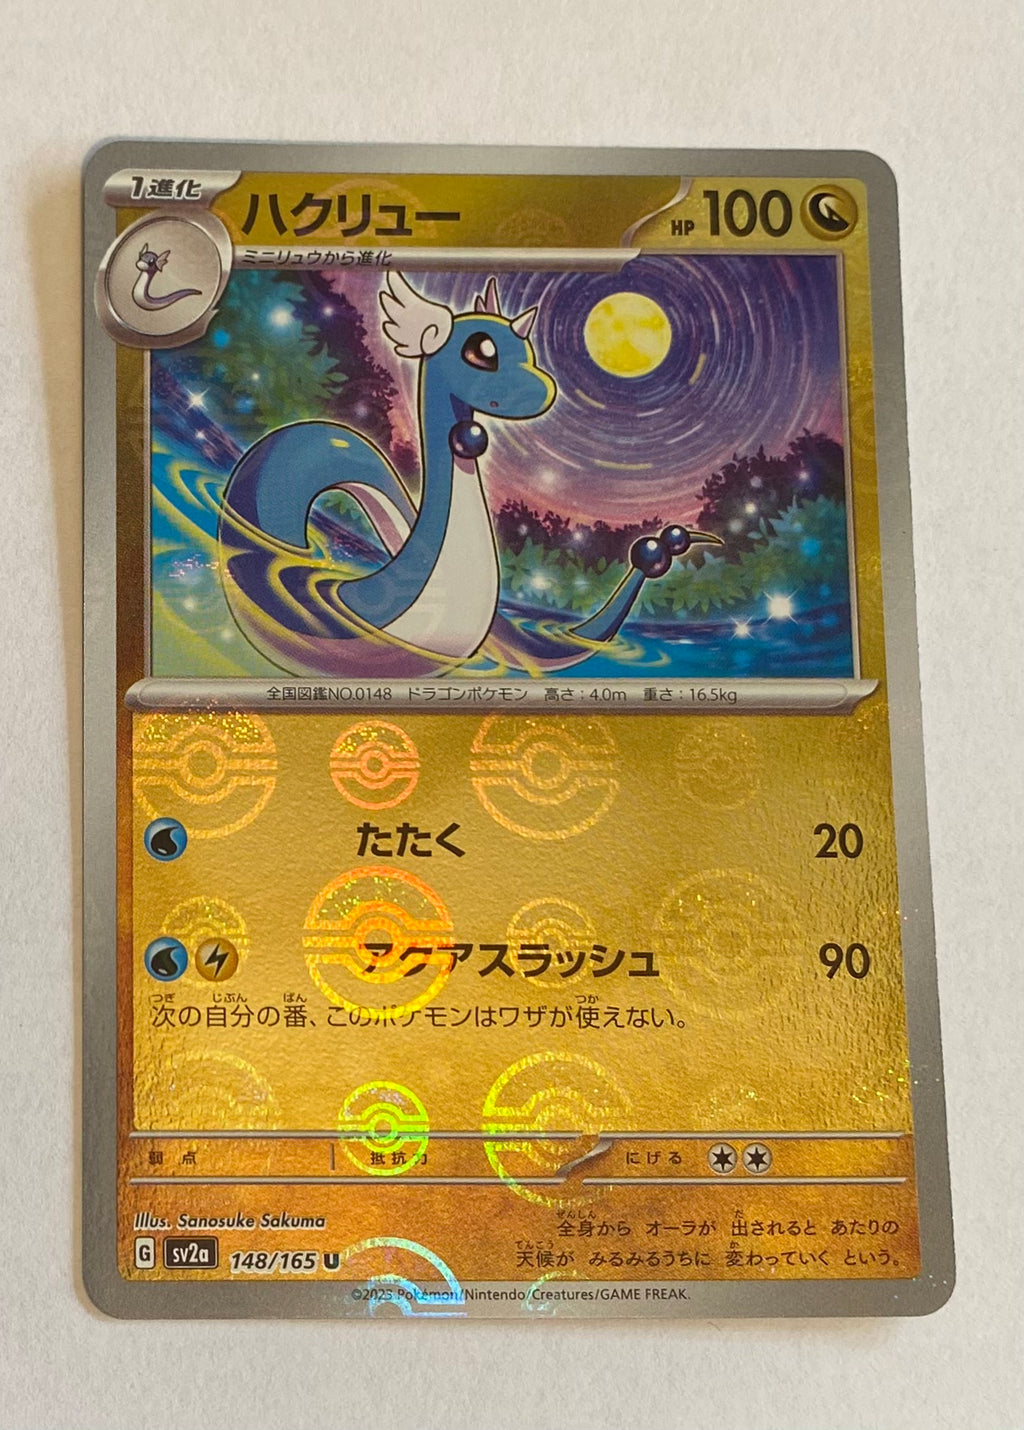 sv2a Japanese Pokemon Card 151 - 148/165 Dragonair Reverse Holo